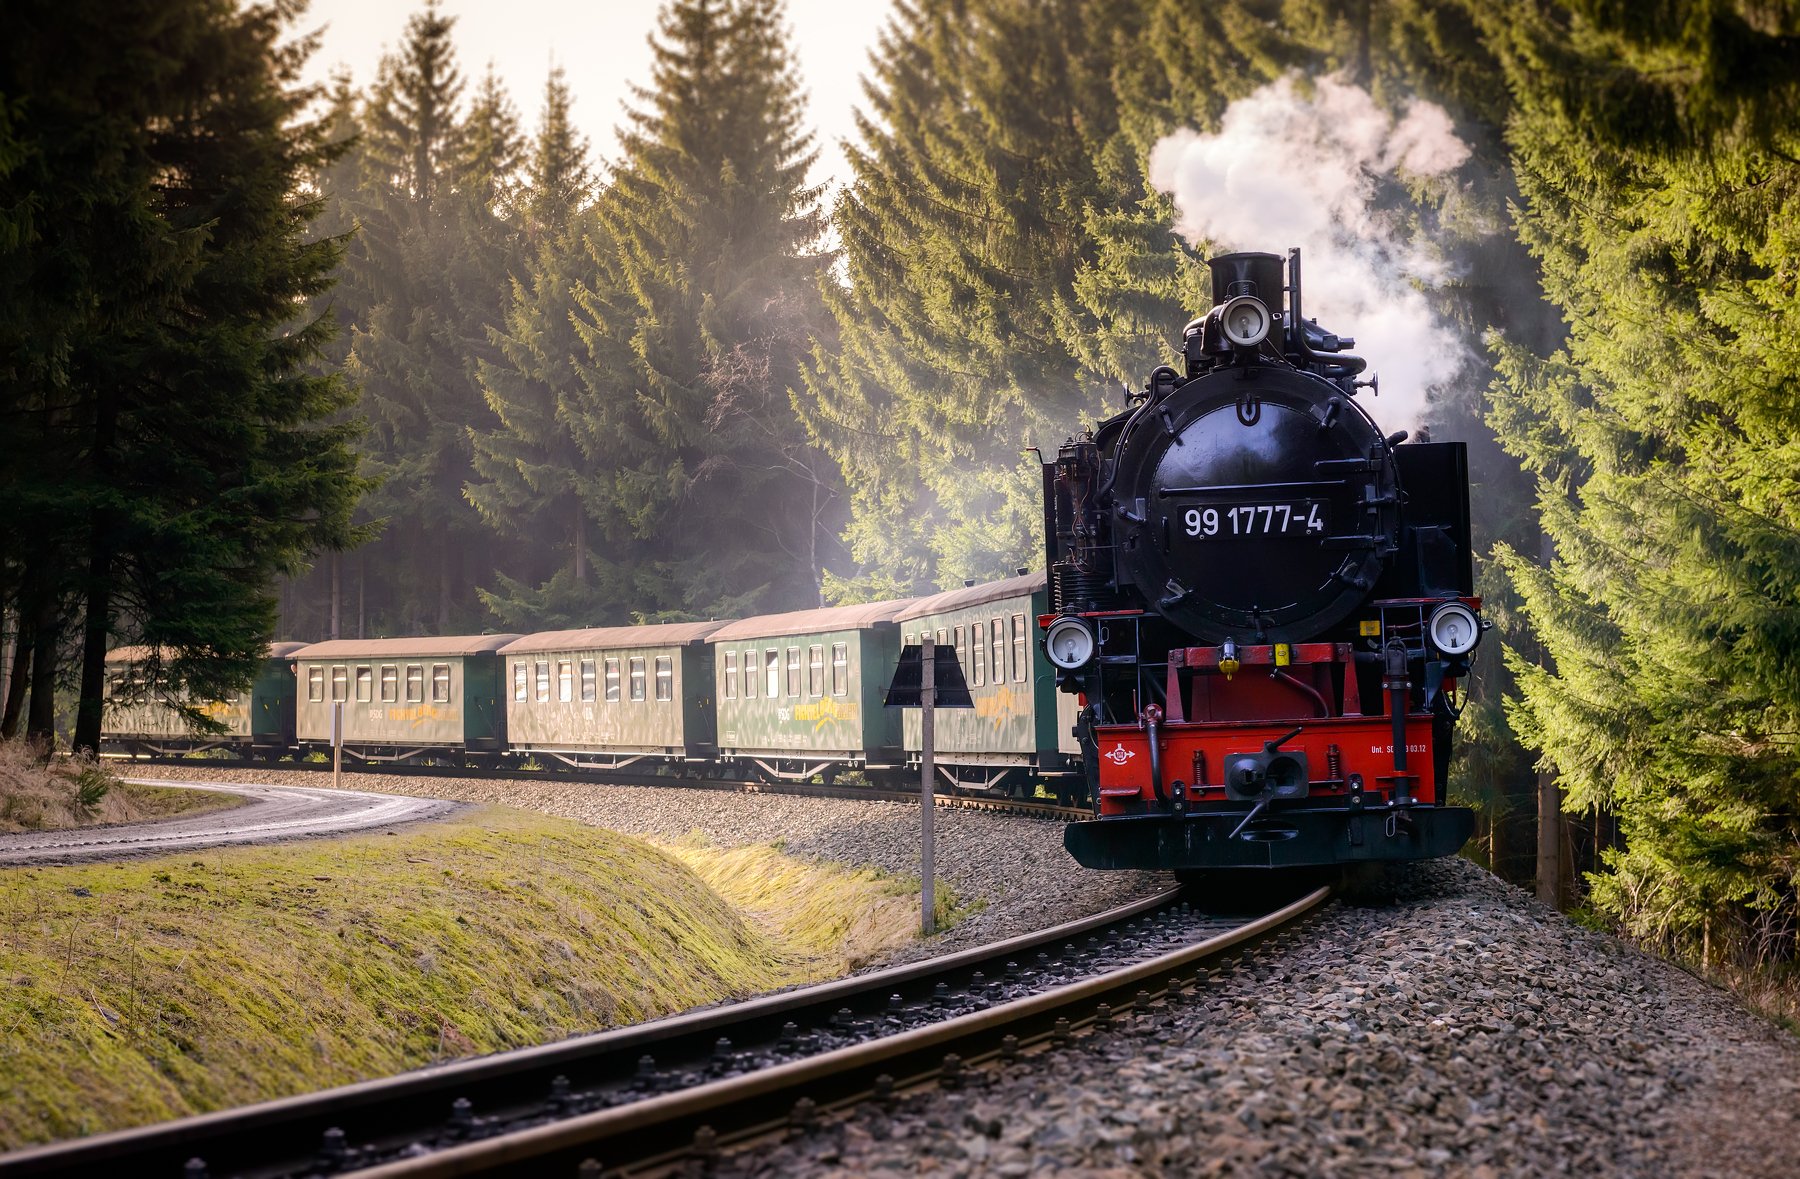 Train, travel, attraction, spring, steam, adventure, IvanKravtsov